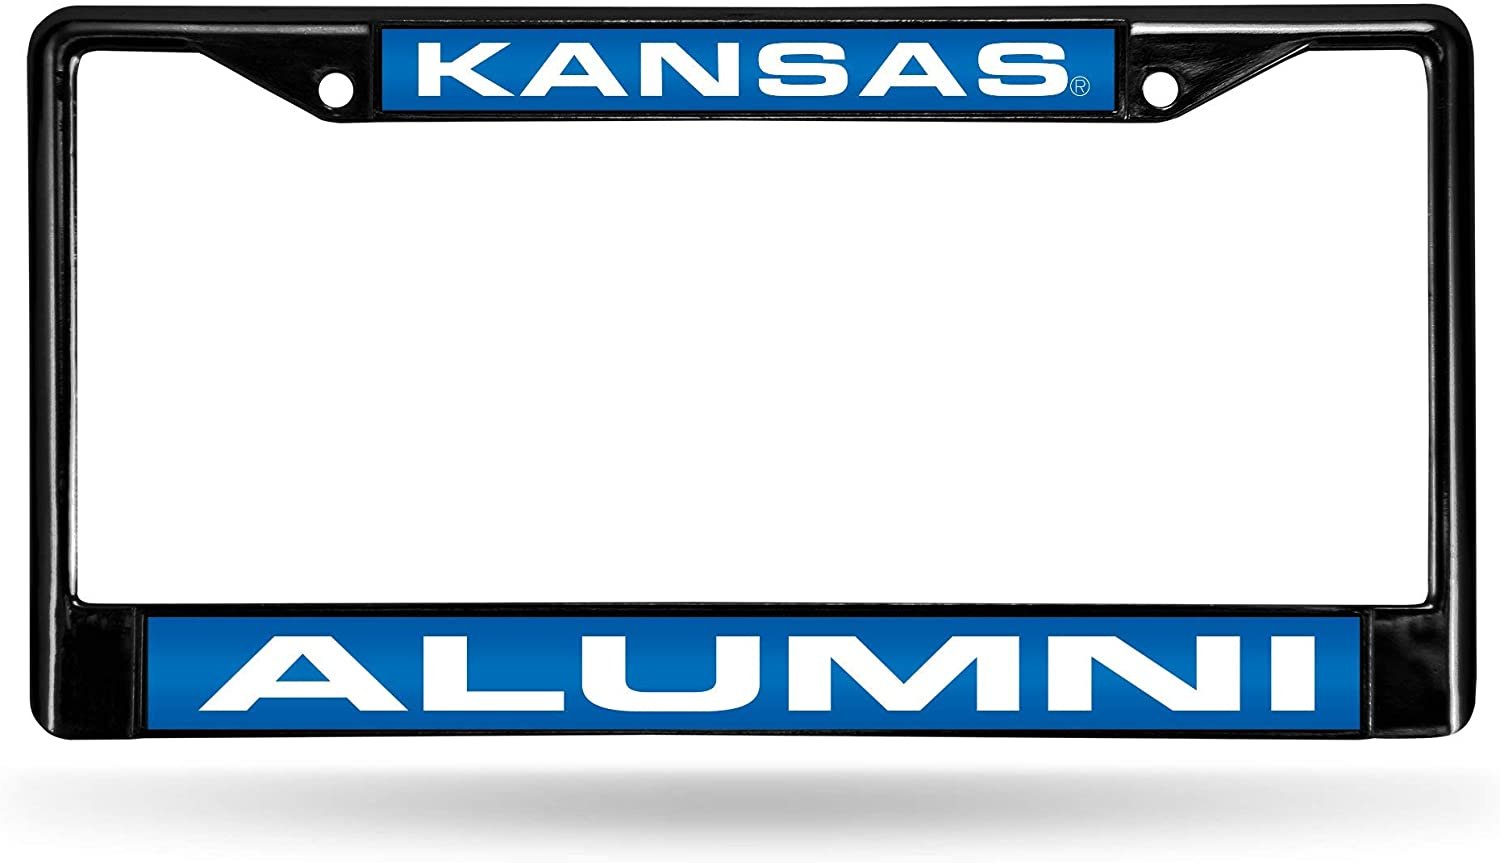 University of Kansas Jayhawks Black Metal License Plate Frame Tag Cover, Alumni Design, Laser Mirrored Inserts, 6x12 Inch